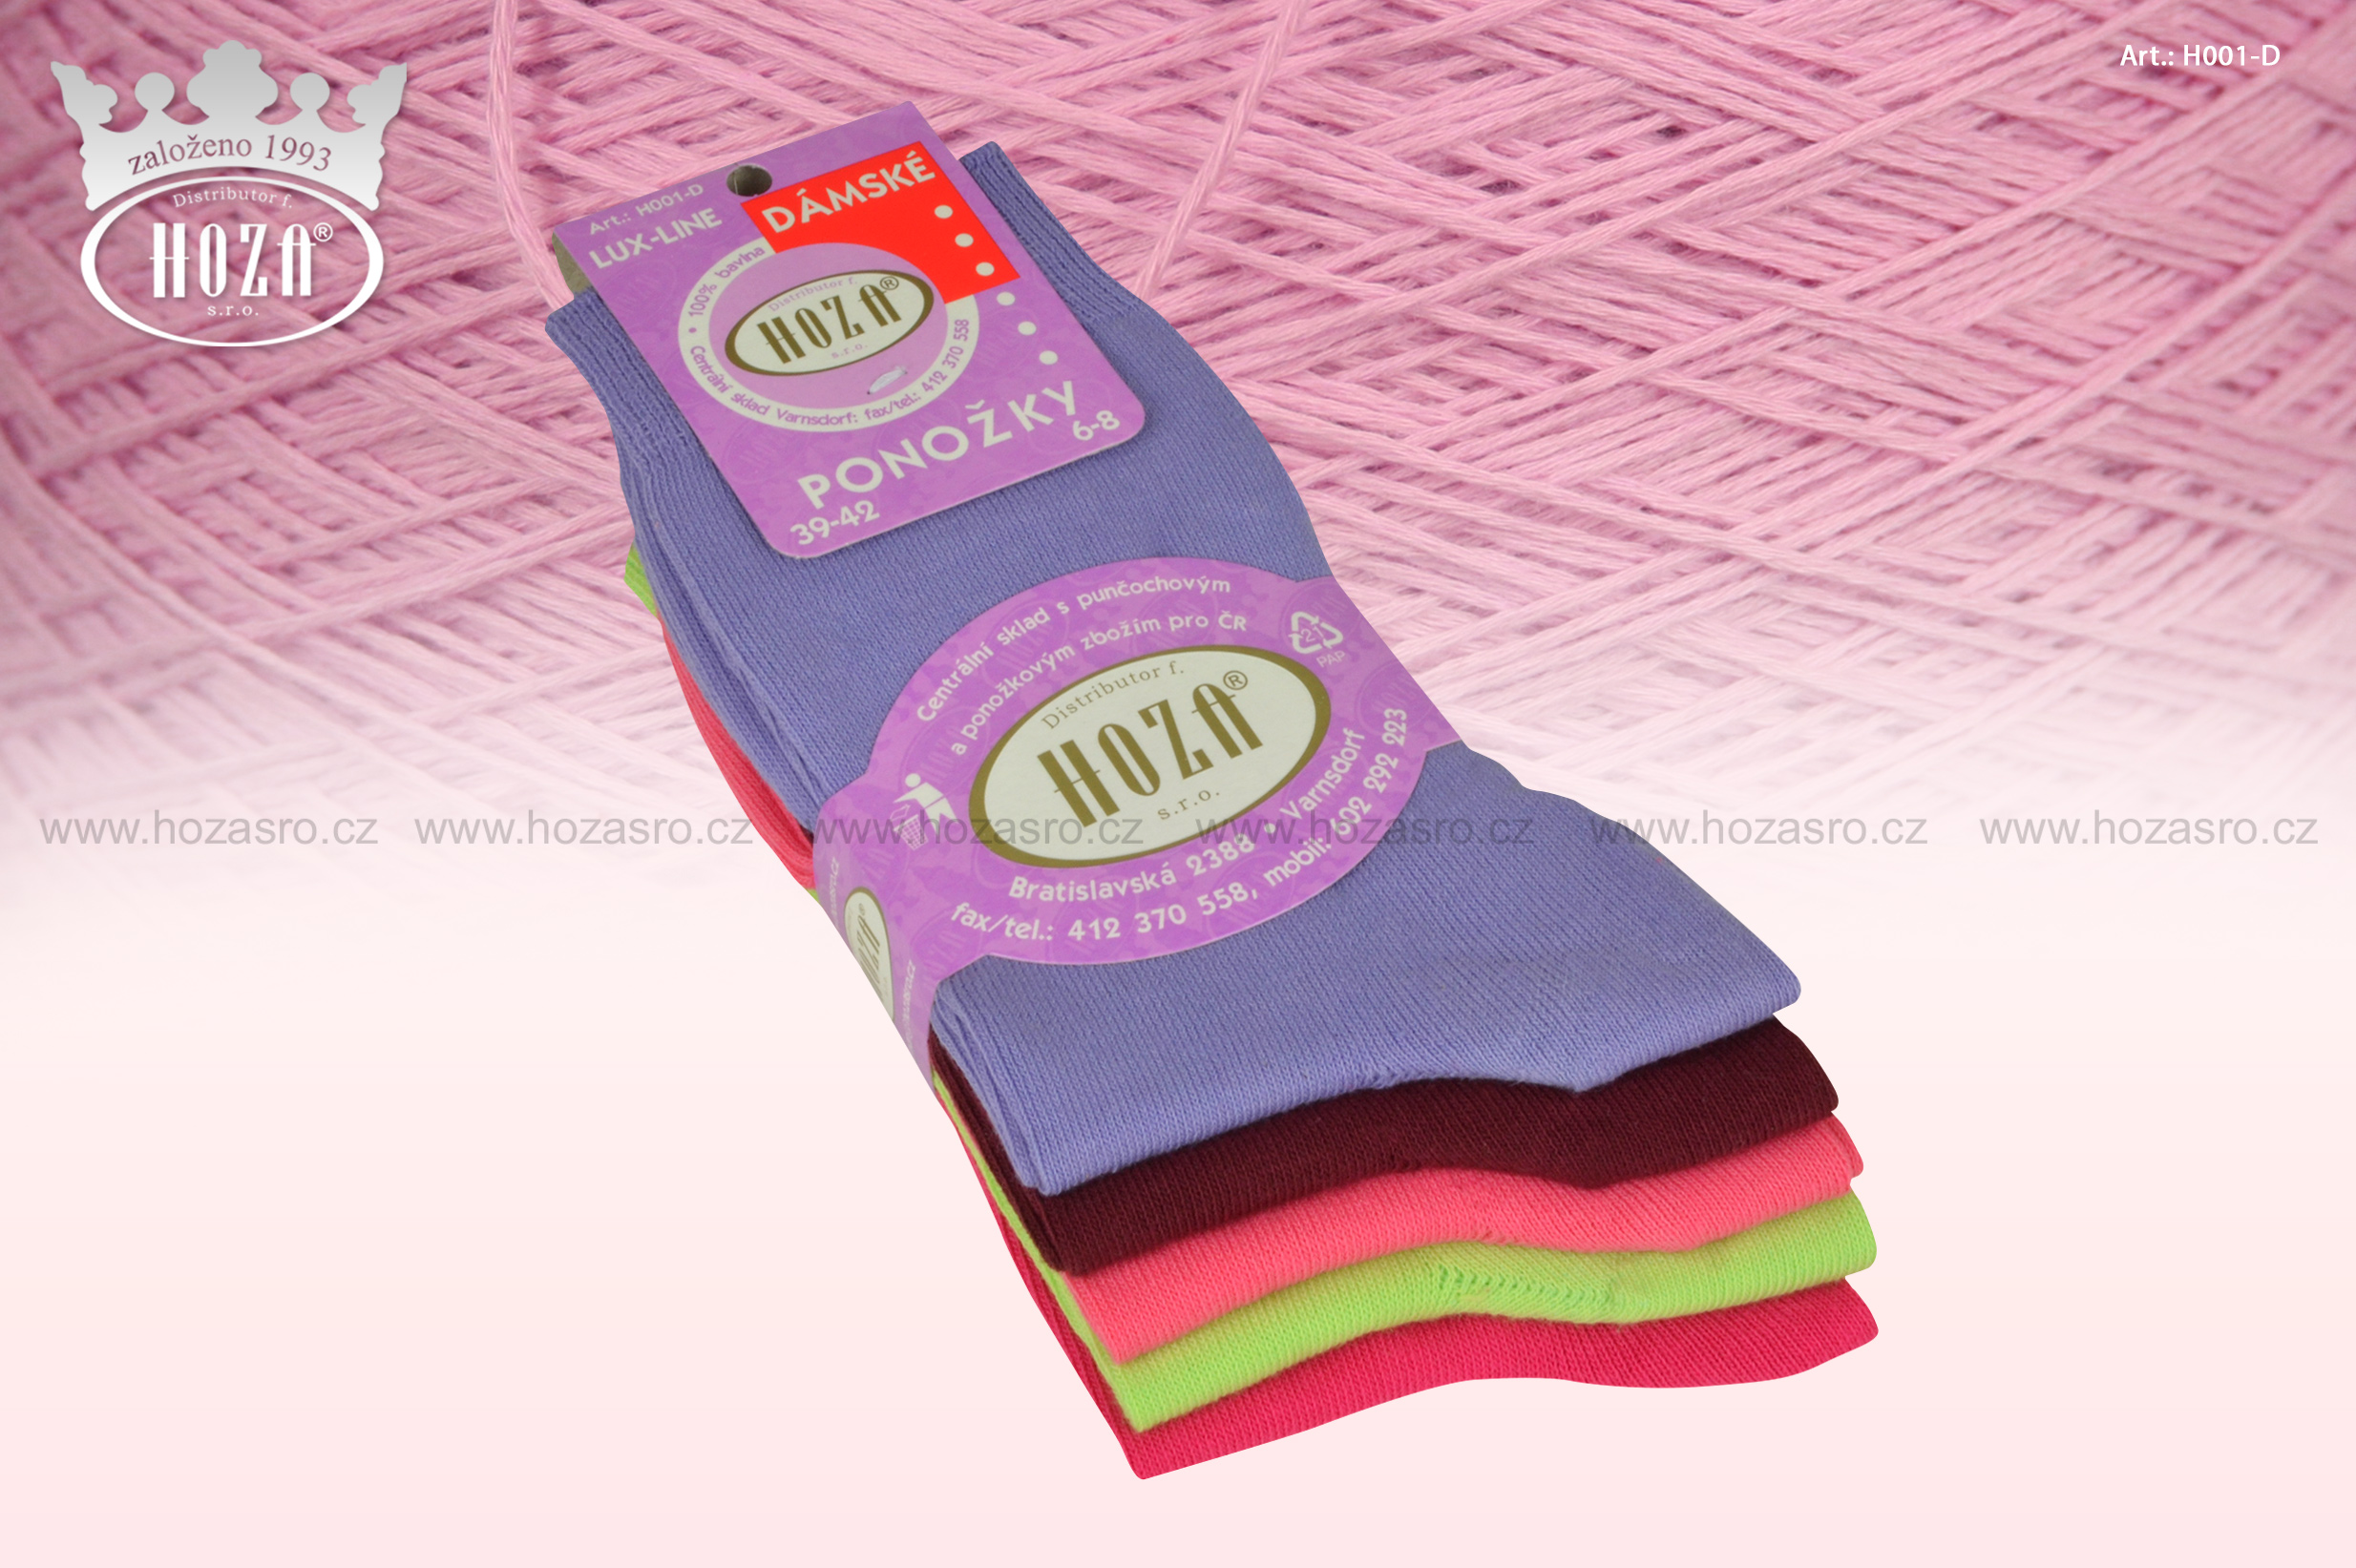 Dámské ponožky hladké, 100% bavlna -barevný mix - H001-D